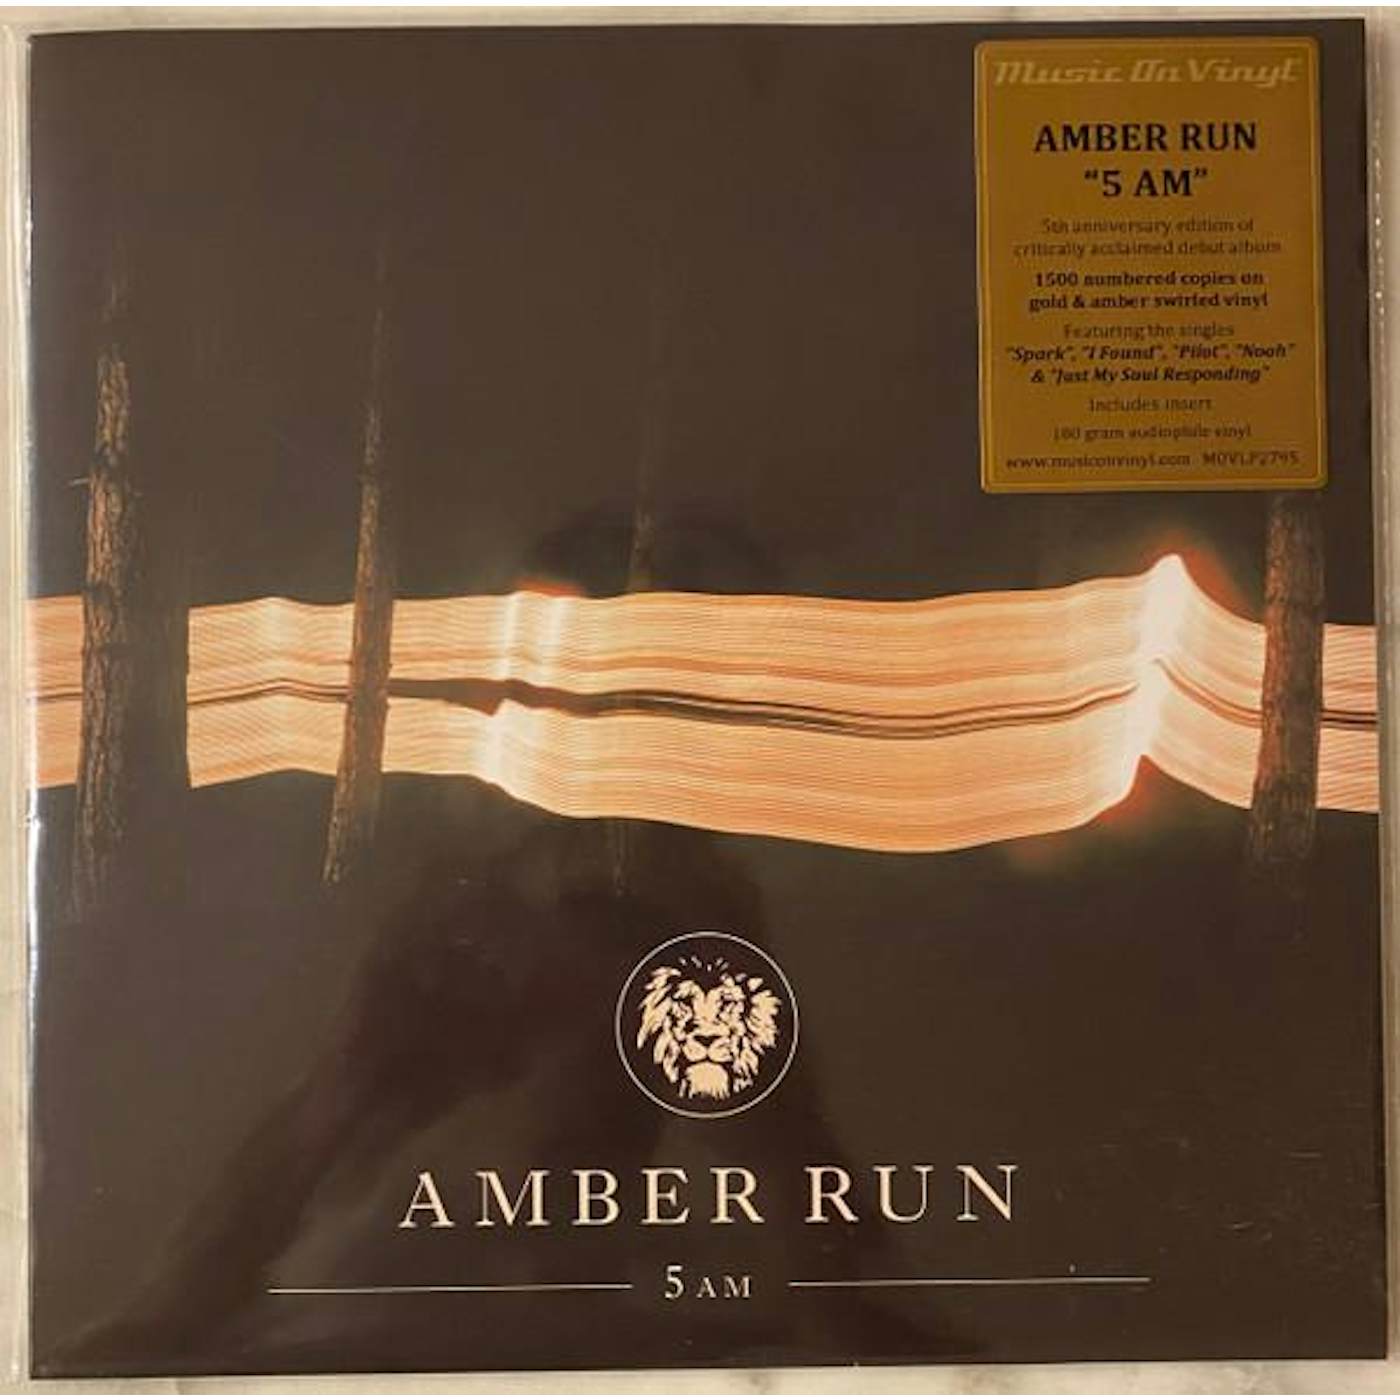 Amber Run 5AM (GOLD & AMBER SWIRLED) Vinyl Record